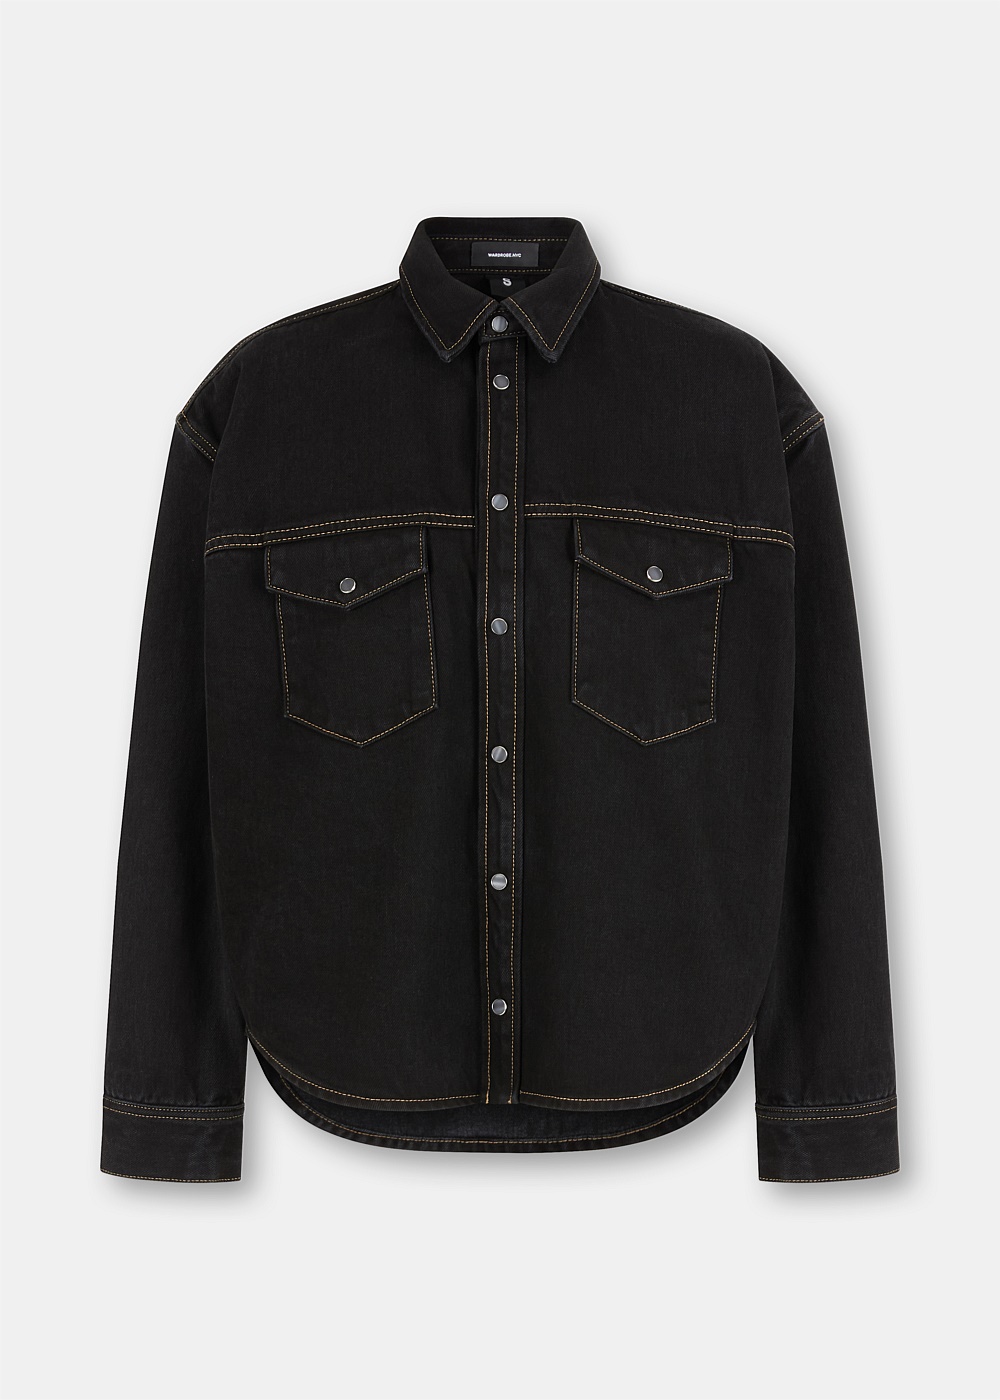 Shop WARDROBE.NYC Black Denim Jacket | Harrolds Australia